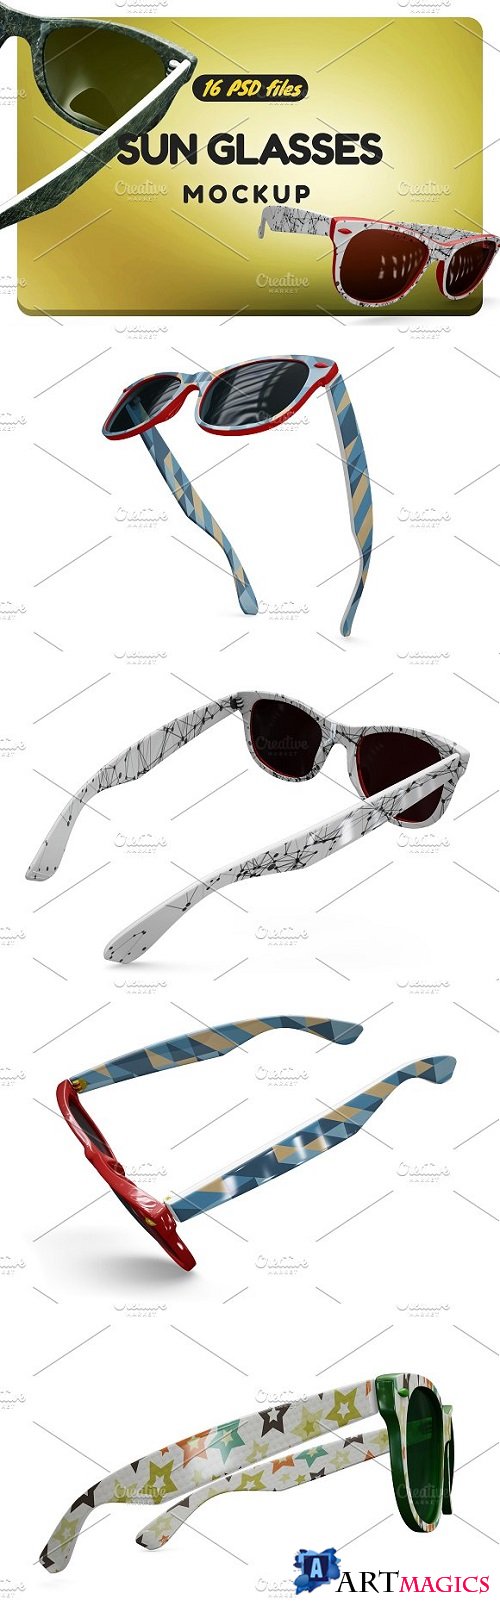 Rayban Sun Glasses Mockup 2174013